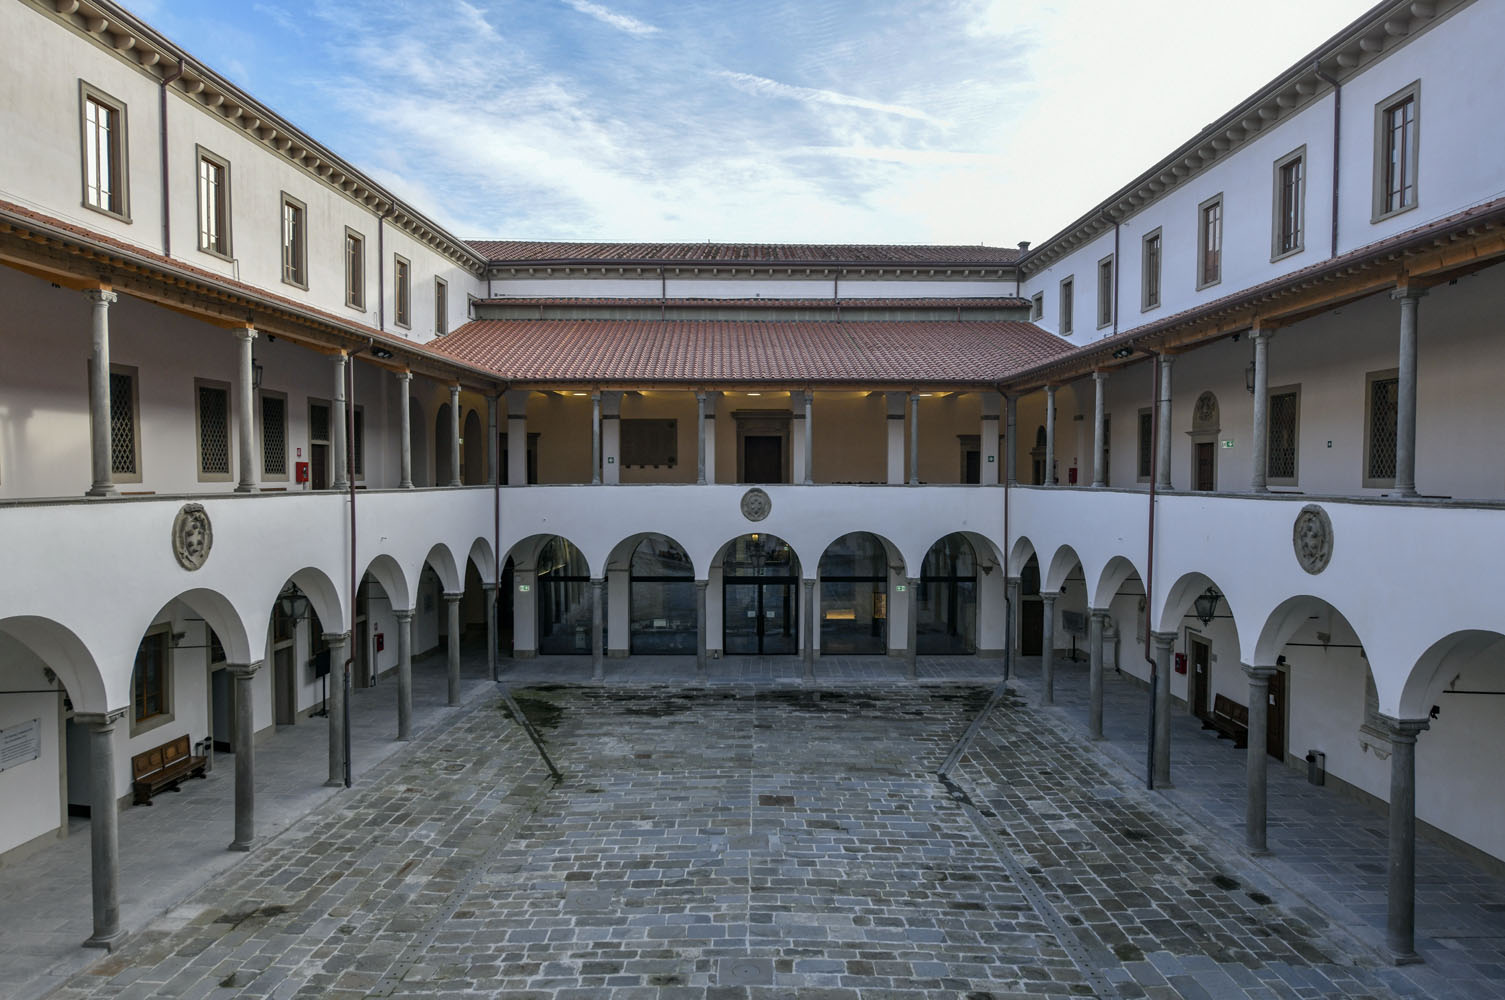 Pisa – Biblioteca Universitaria – Completamento consolidamento, restauro,
riallestimento